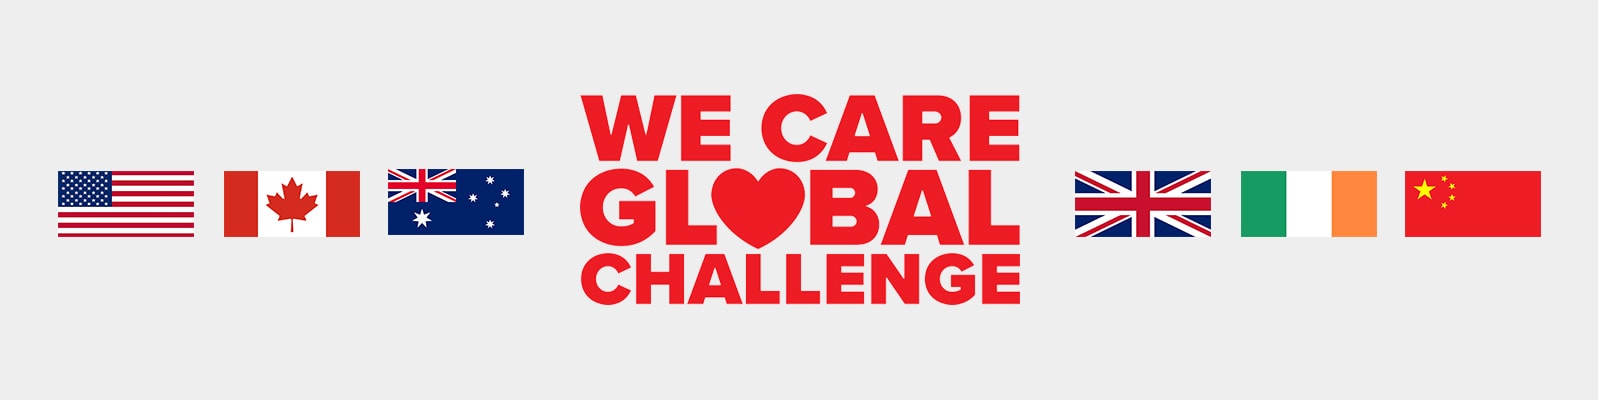 We Care Global Challenge